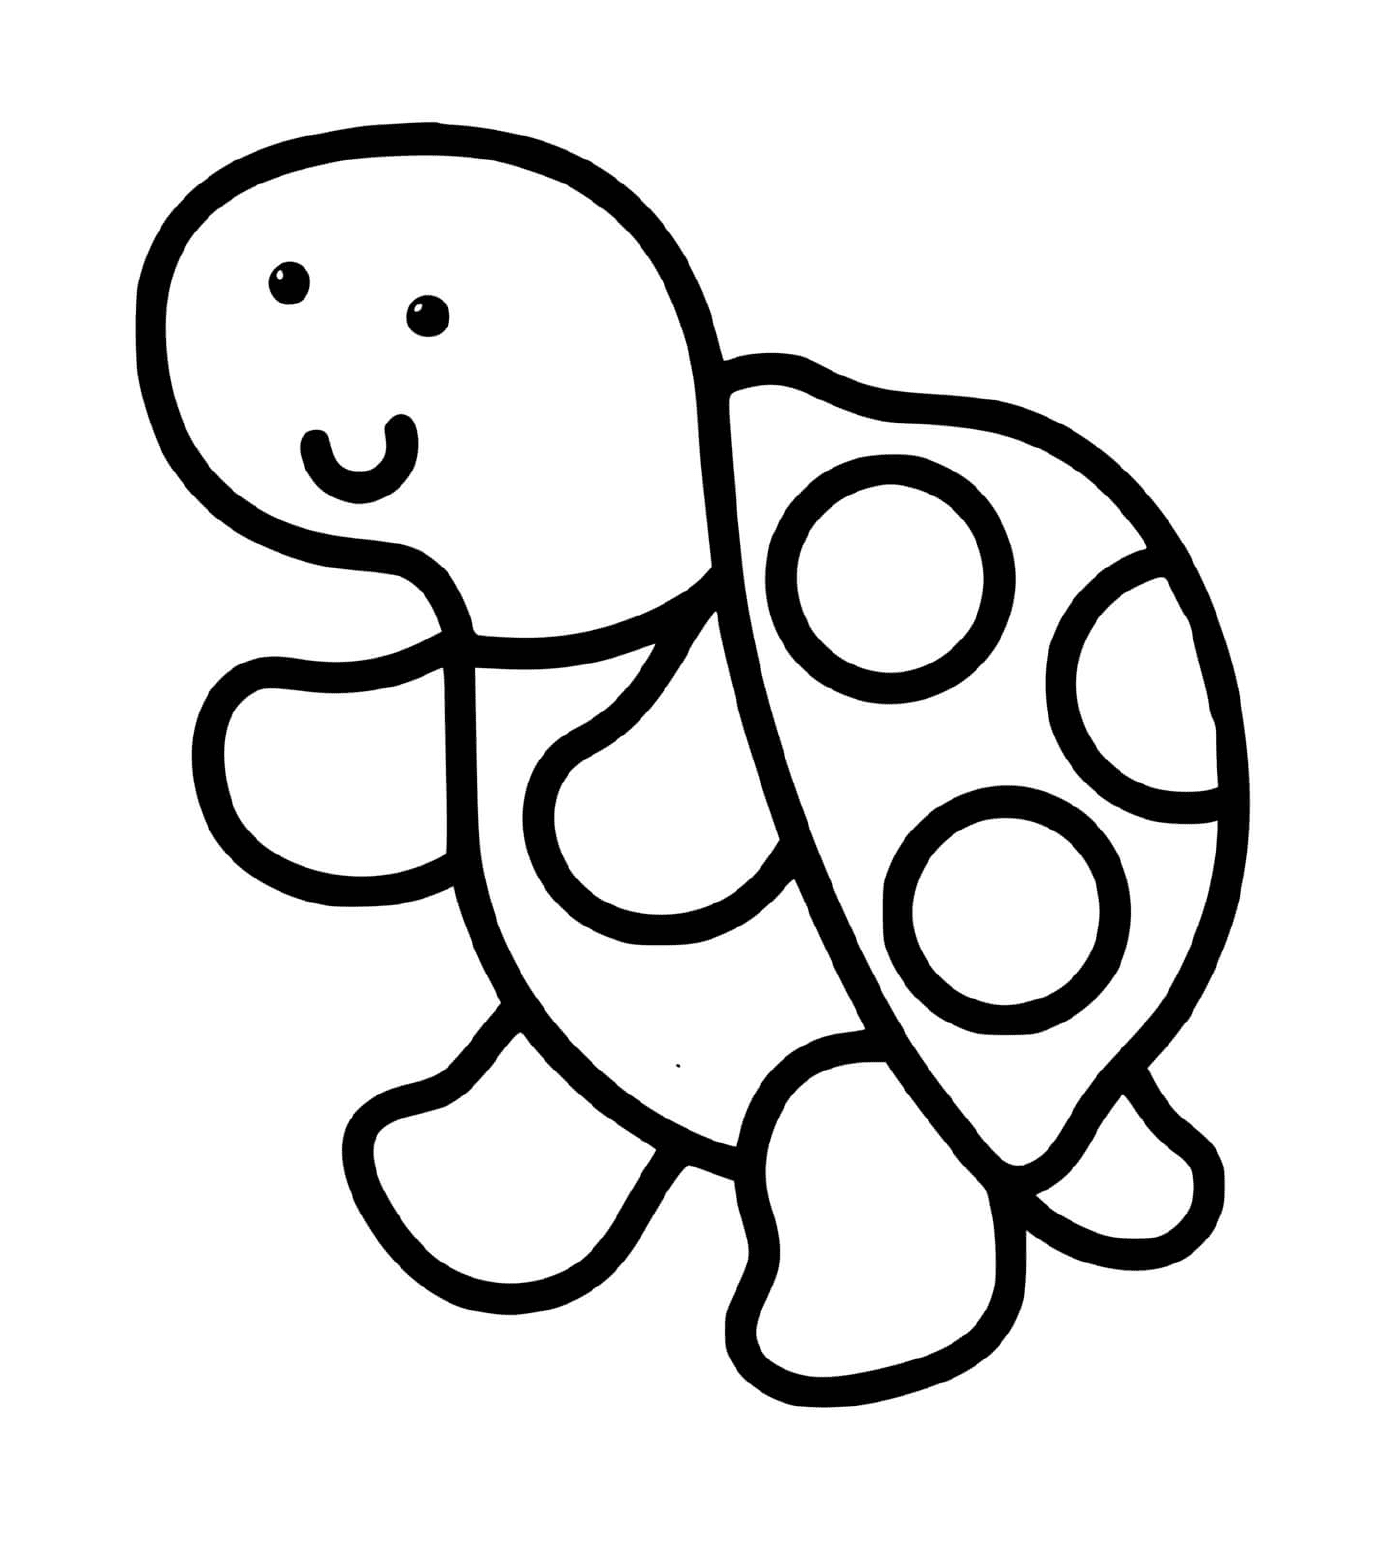  Una tartaruga facile da disegnare per i bimbi di 2 anni 